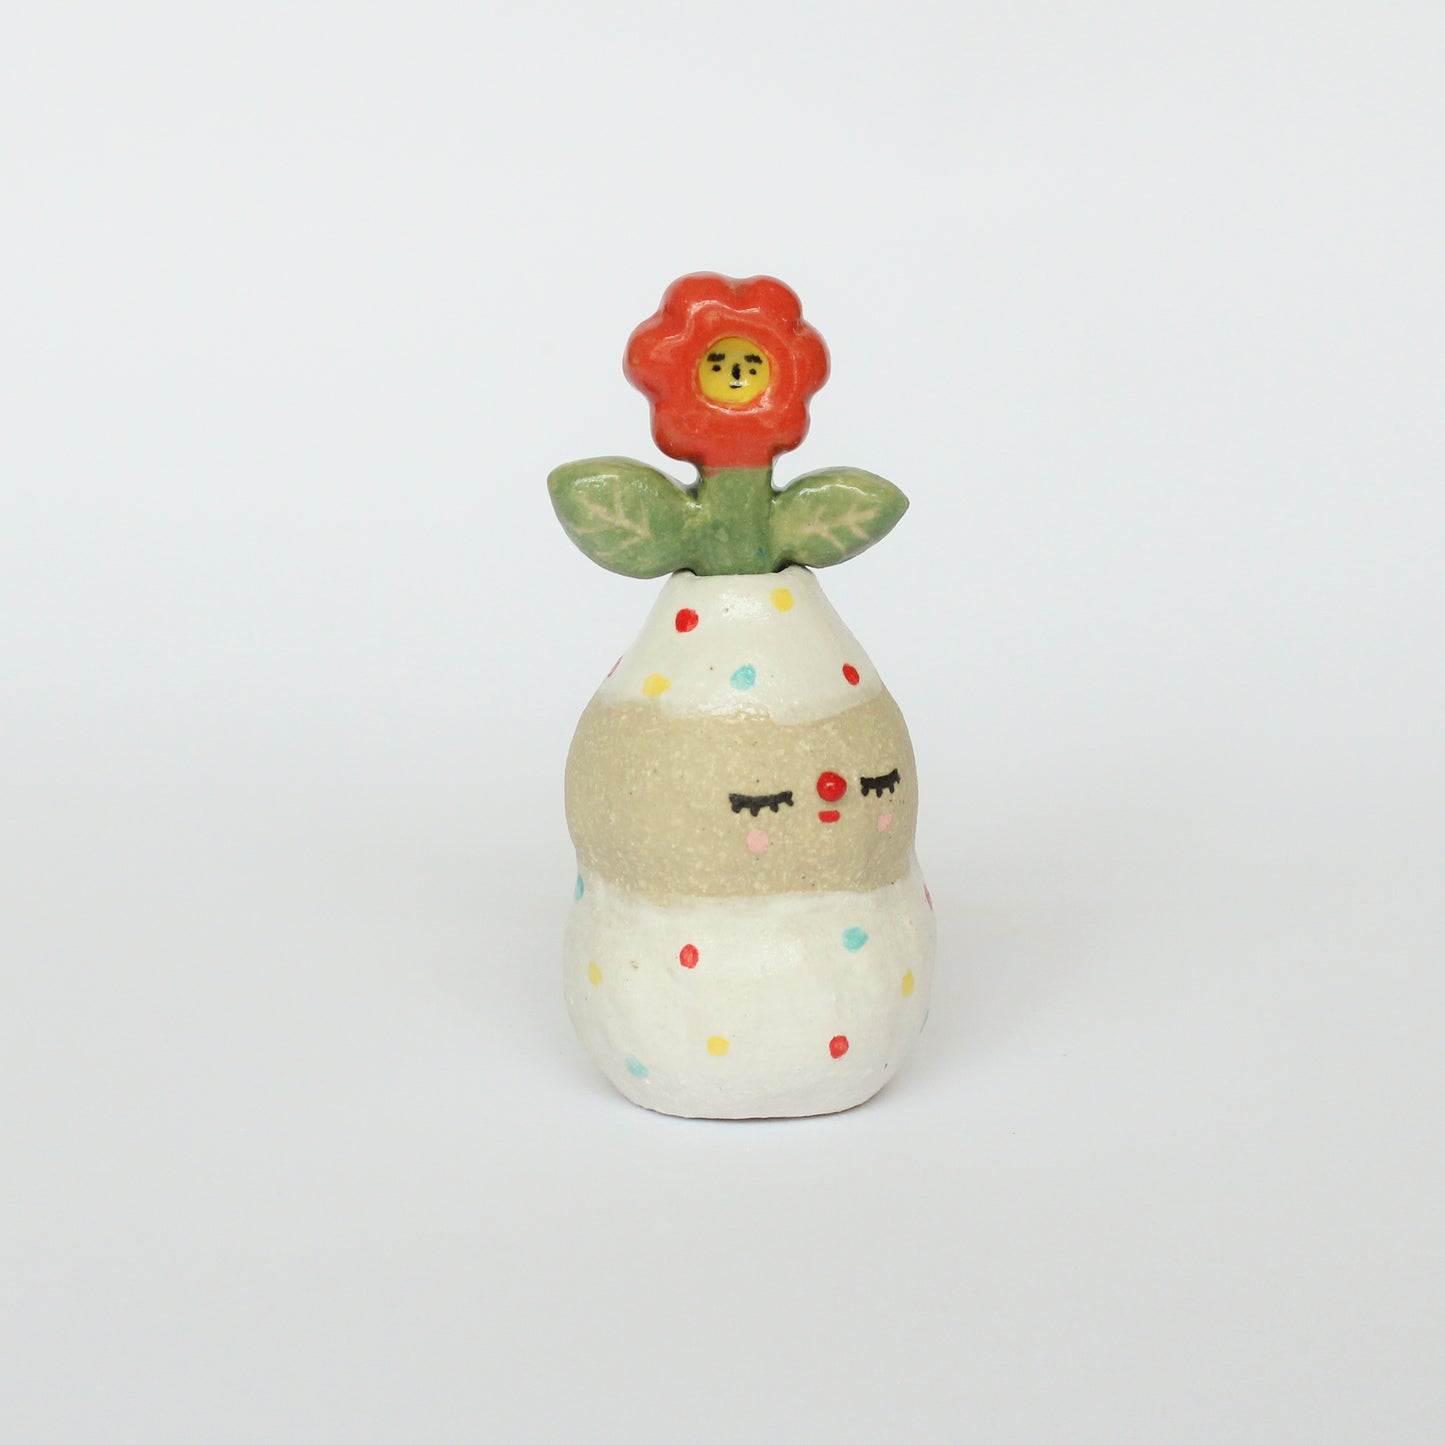 Flower and Pierrot Mini ornament